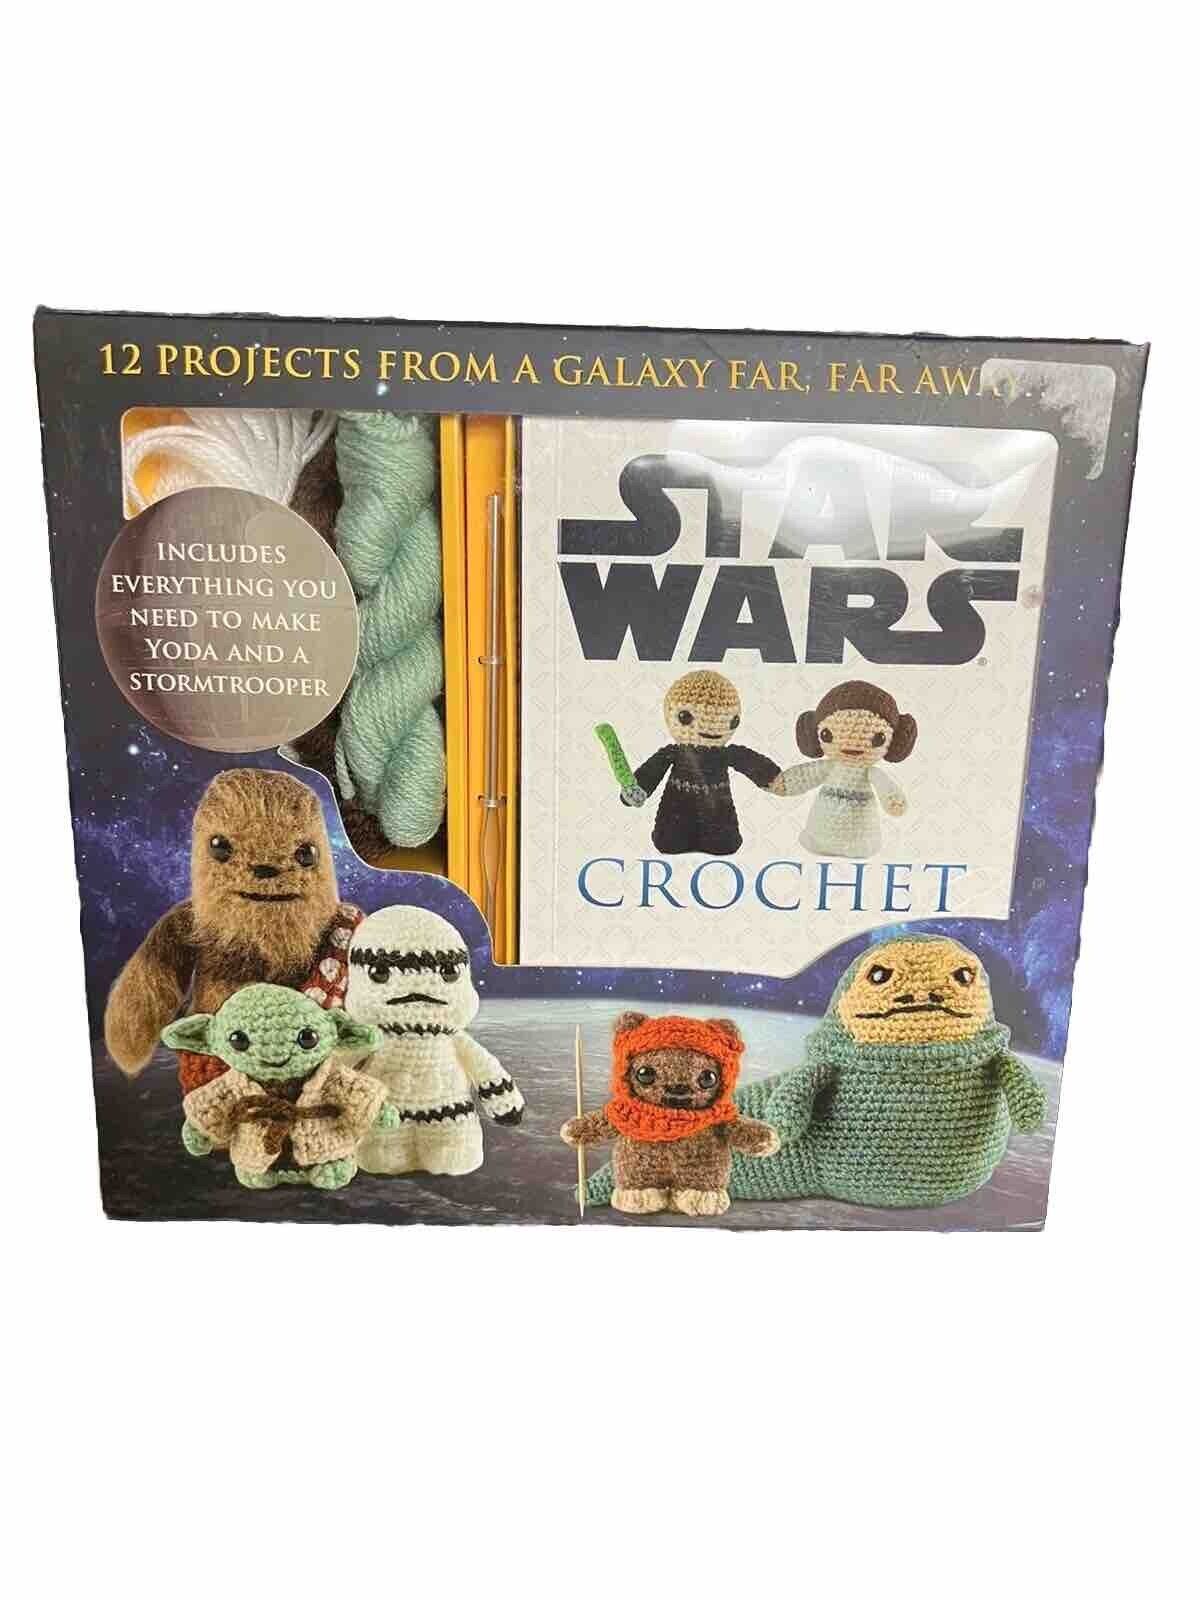 DIY Star Wars Crochet Kit to create Yoda & Stormtrooper - New Open Box